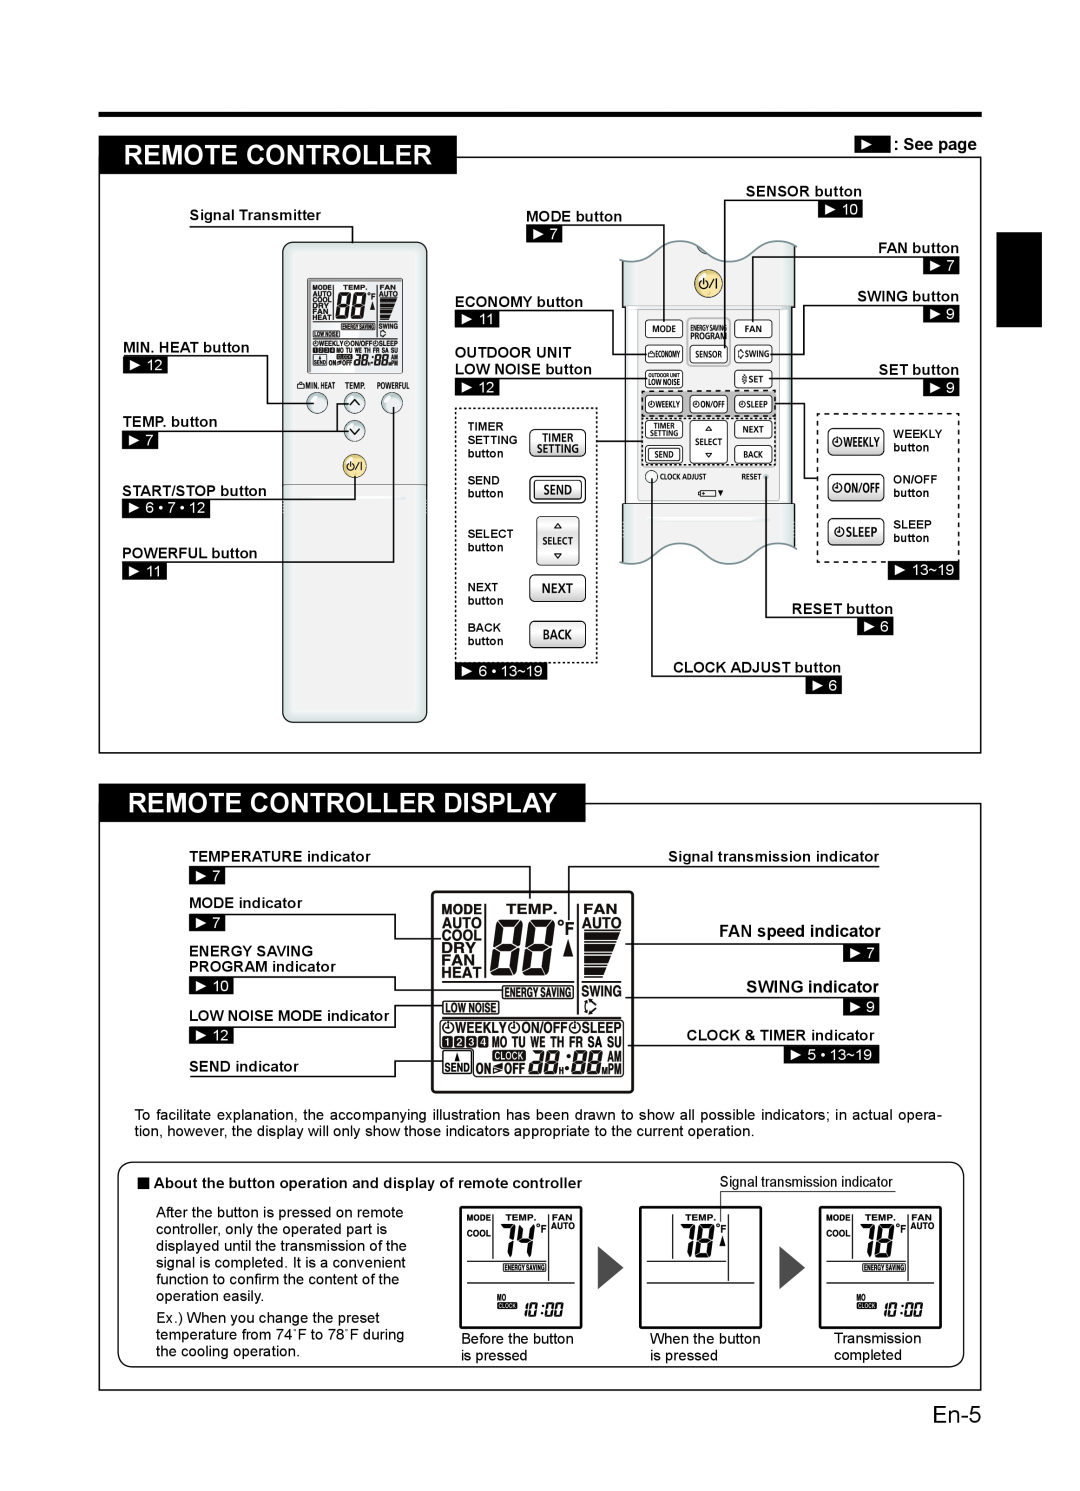 Fujitsu 9319356051 Remote Controller Display, En-5, FAN speed indicator, SWING indicator, 6 13~19, 5 13~19 